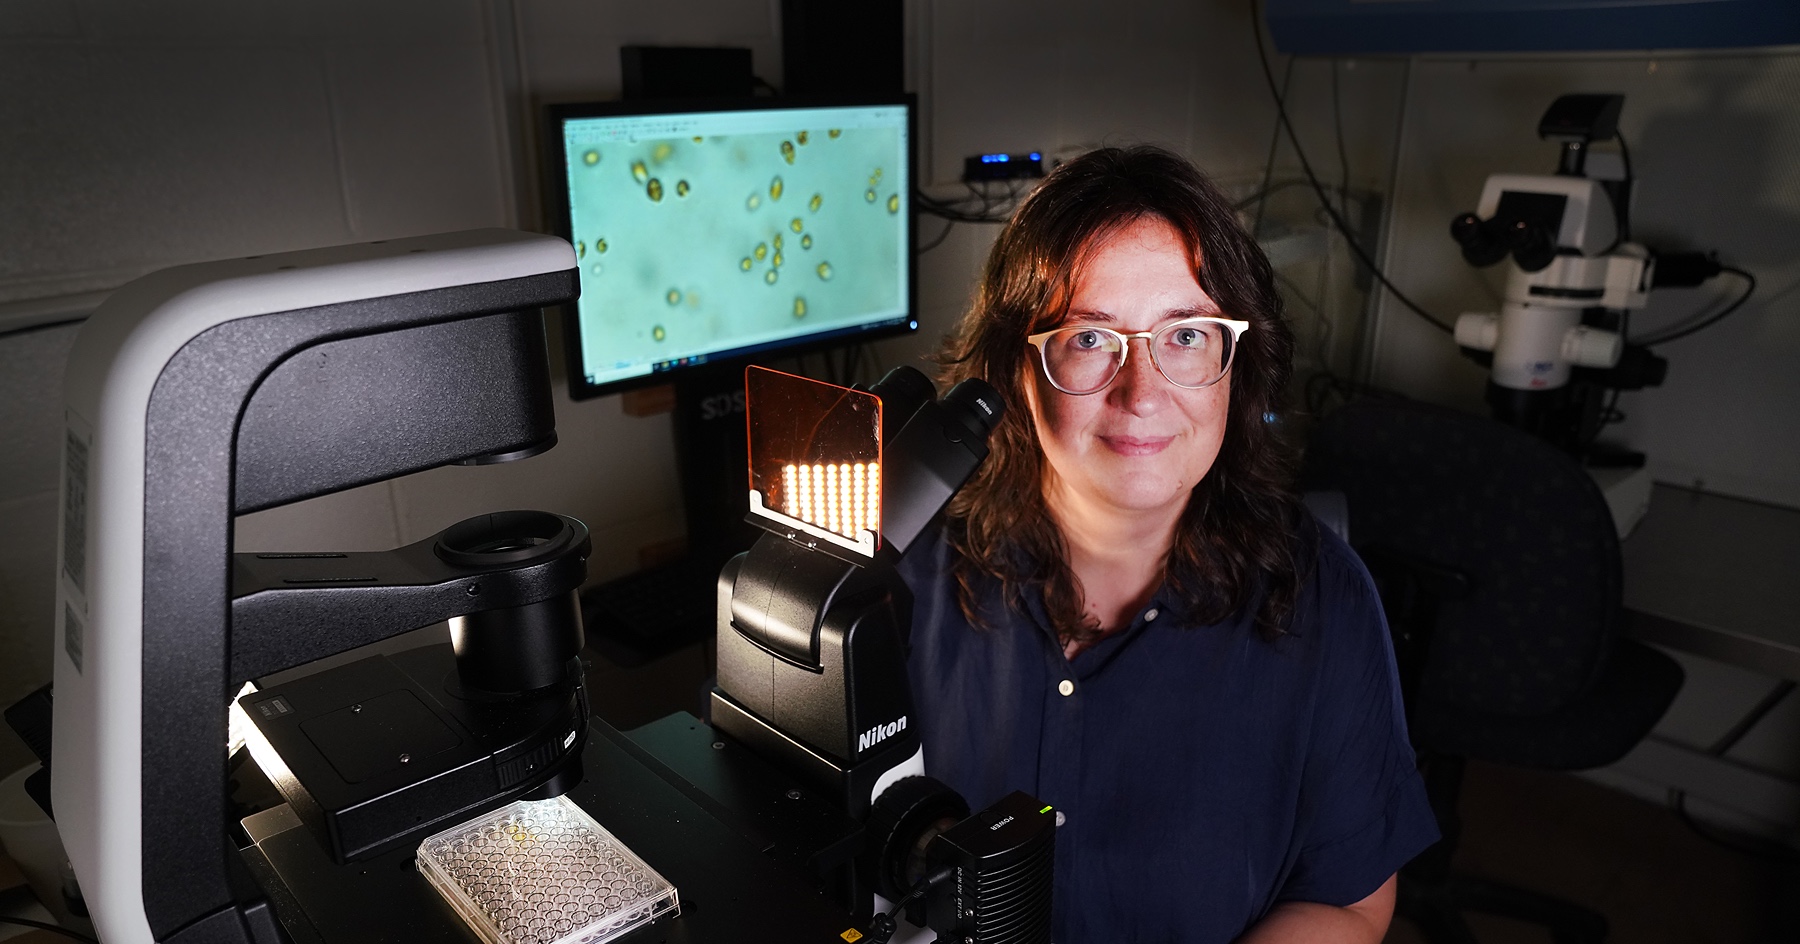 Wisecaver sits at microscope investigating alga blooms